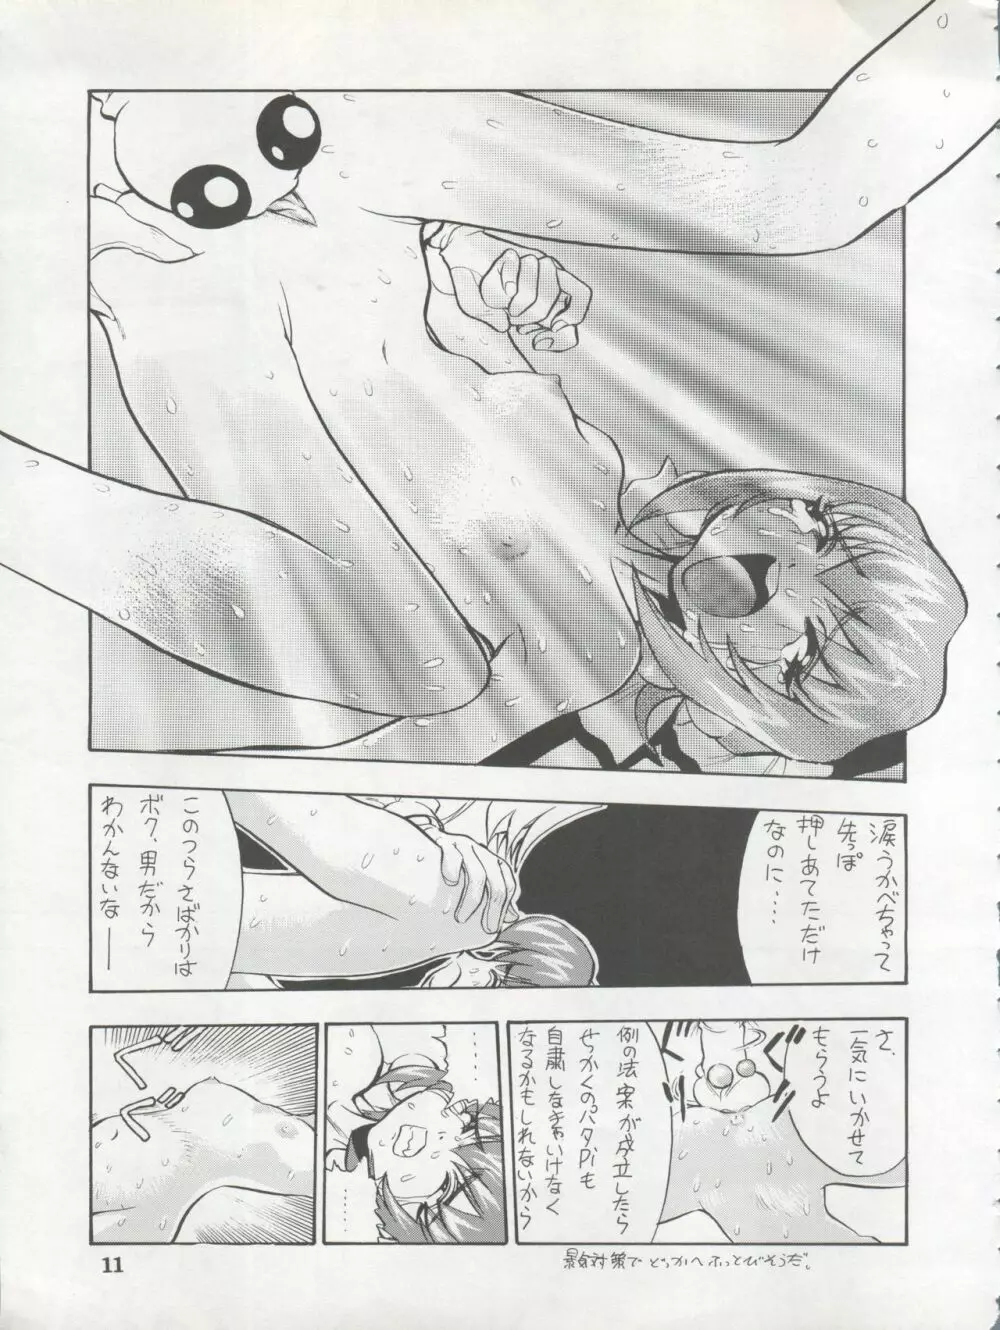 1998 SUMMER 電撃犬王 - page13